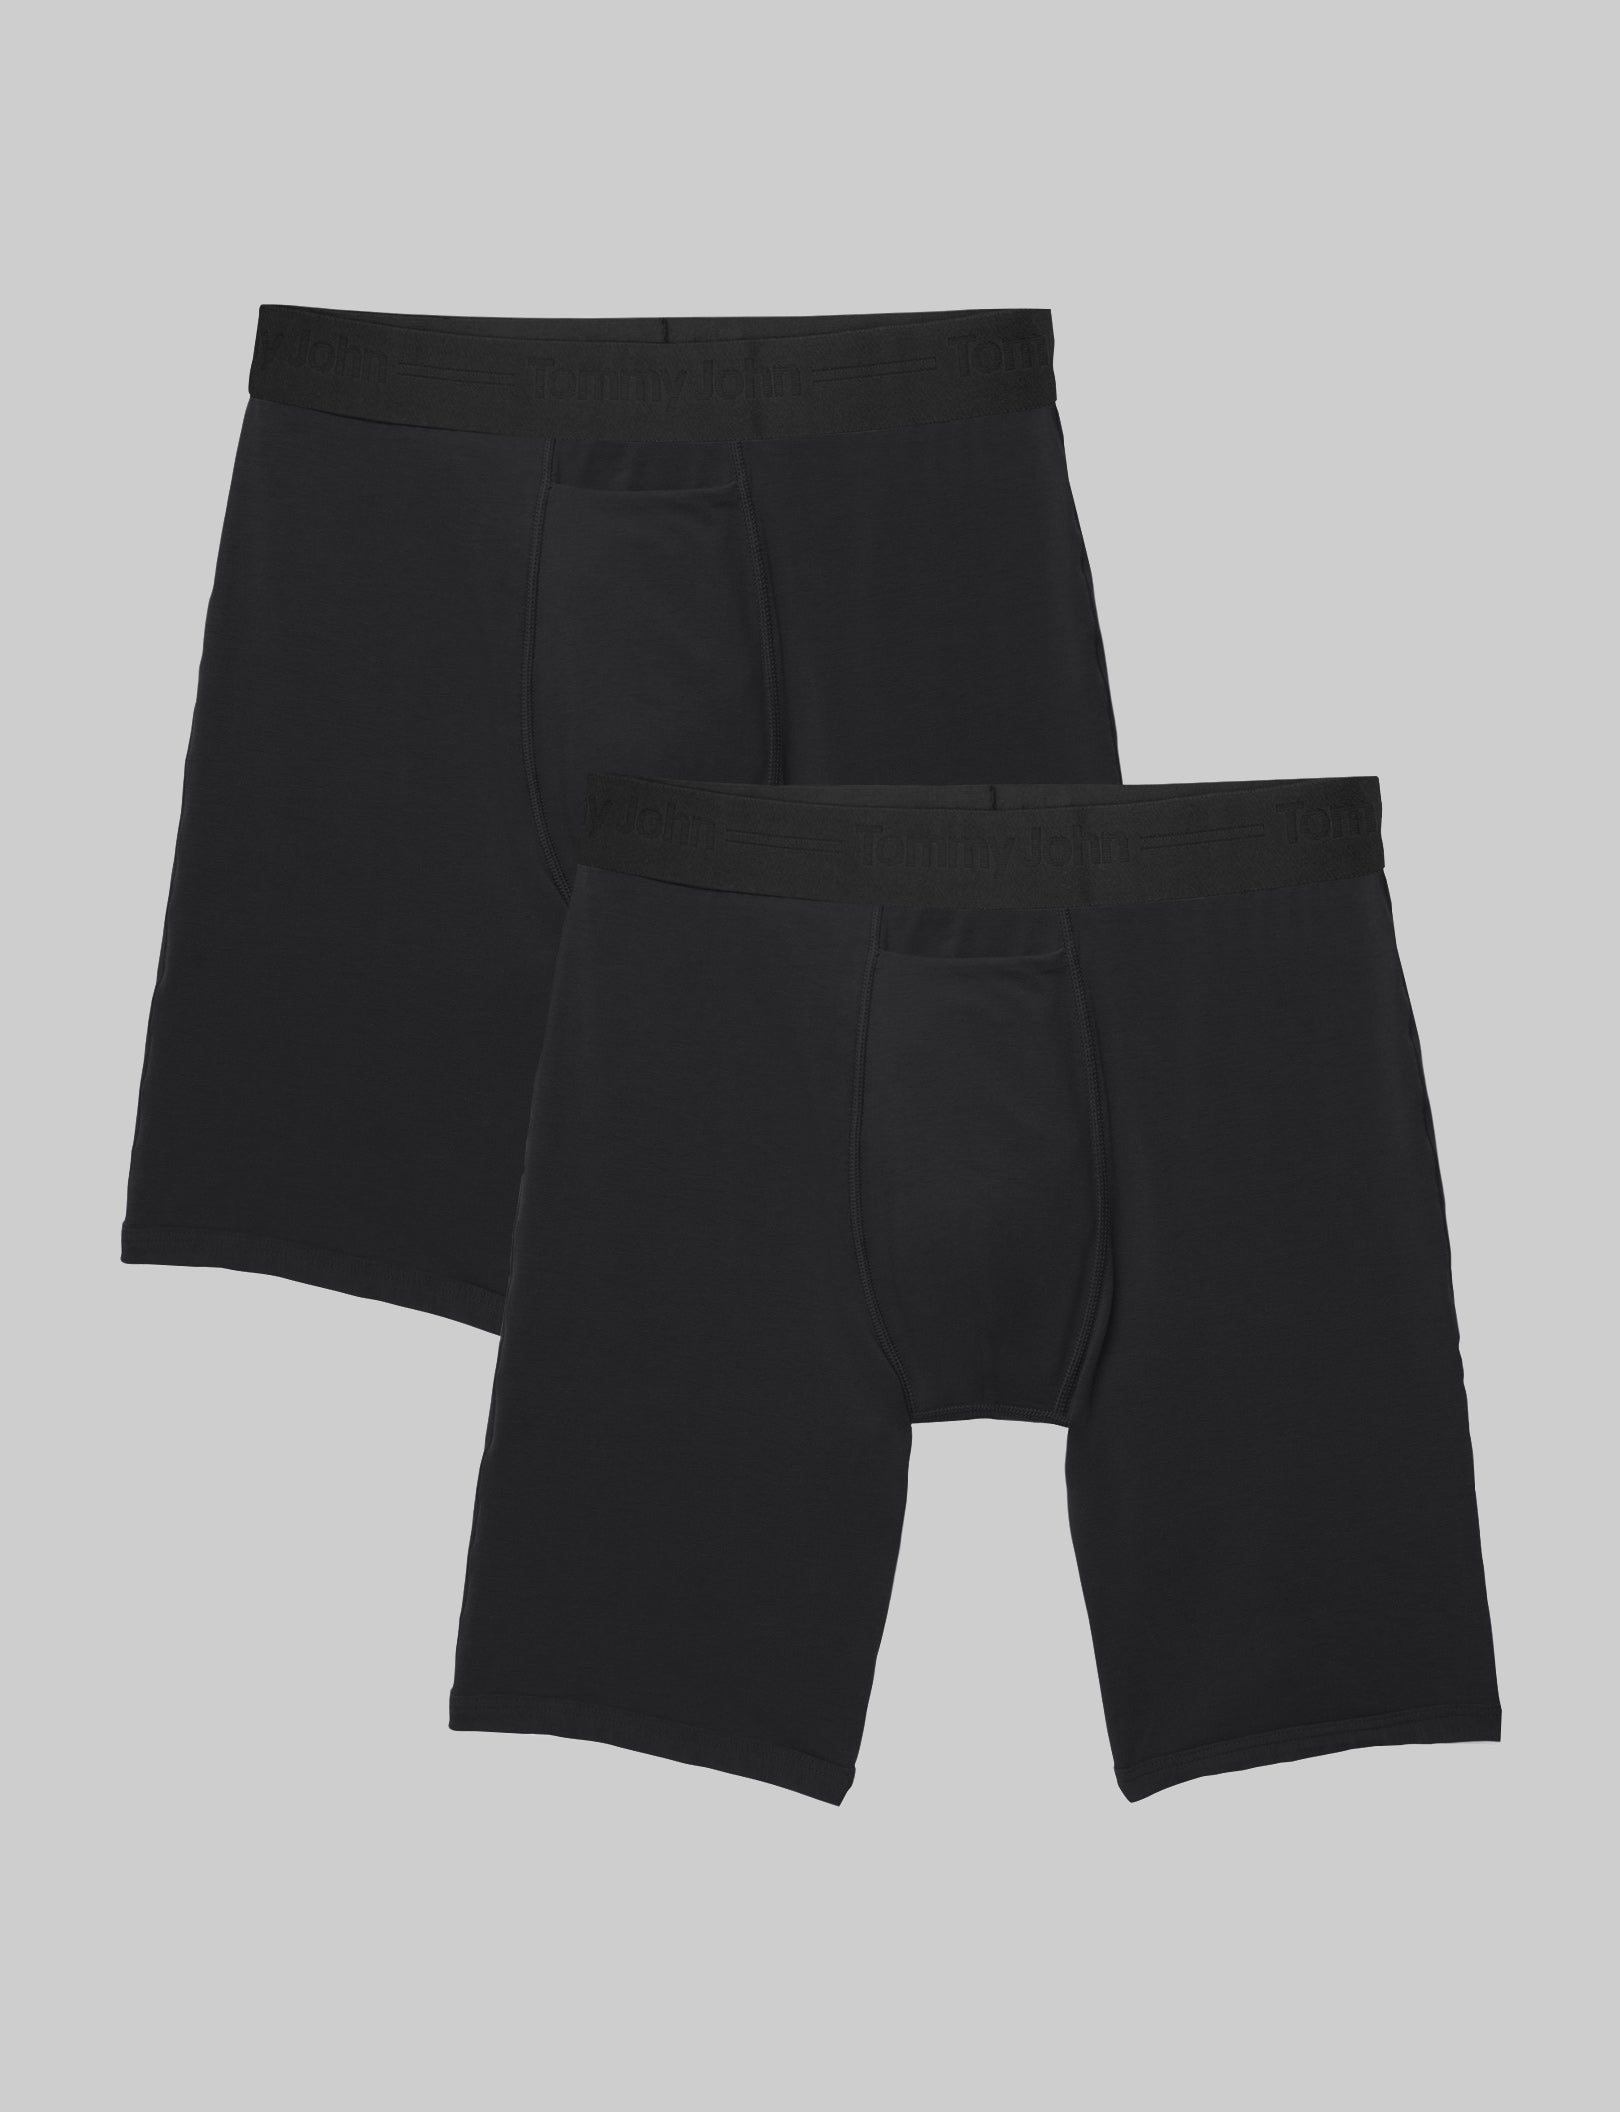 Jockey 2 Pieces Cotton Jersey Boxer Shorts, JMX988800